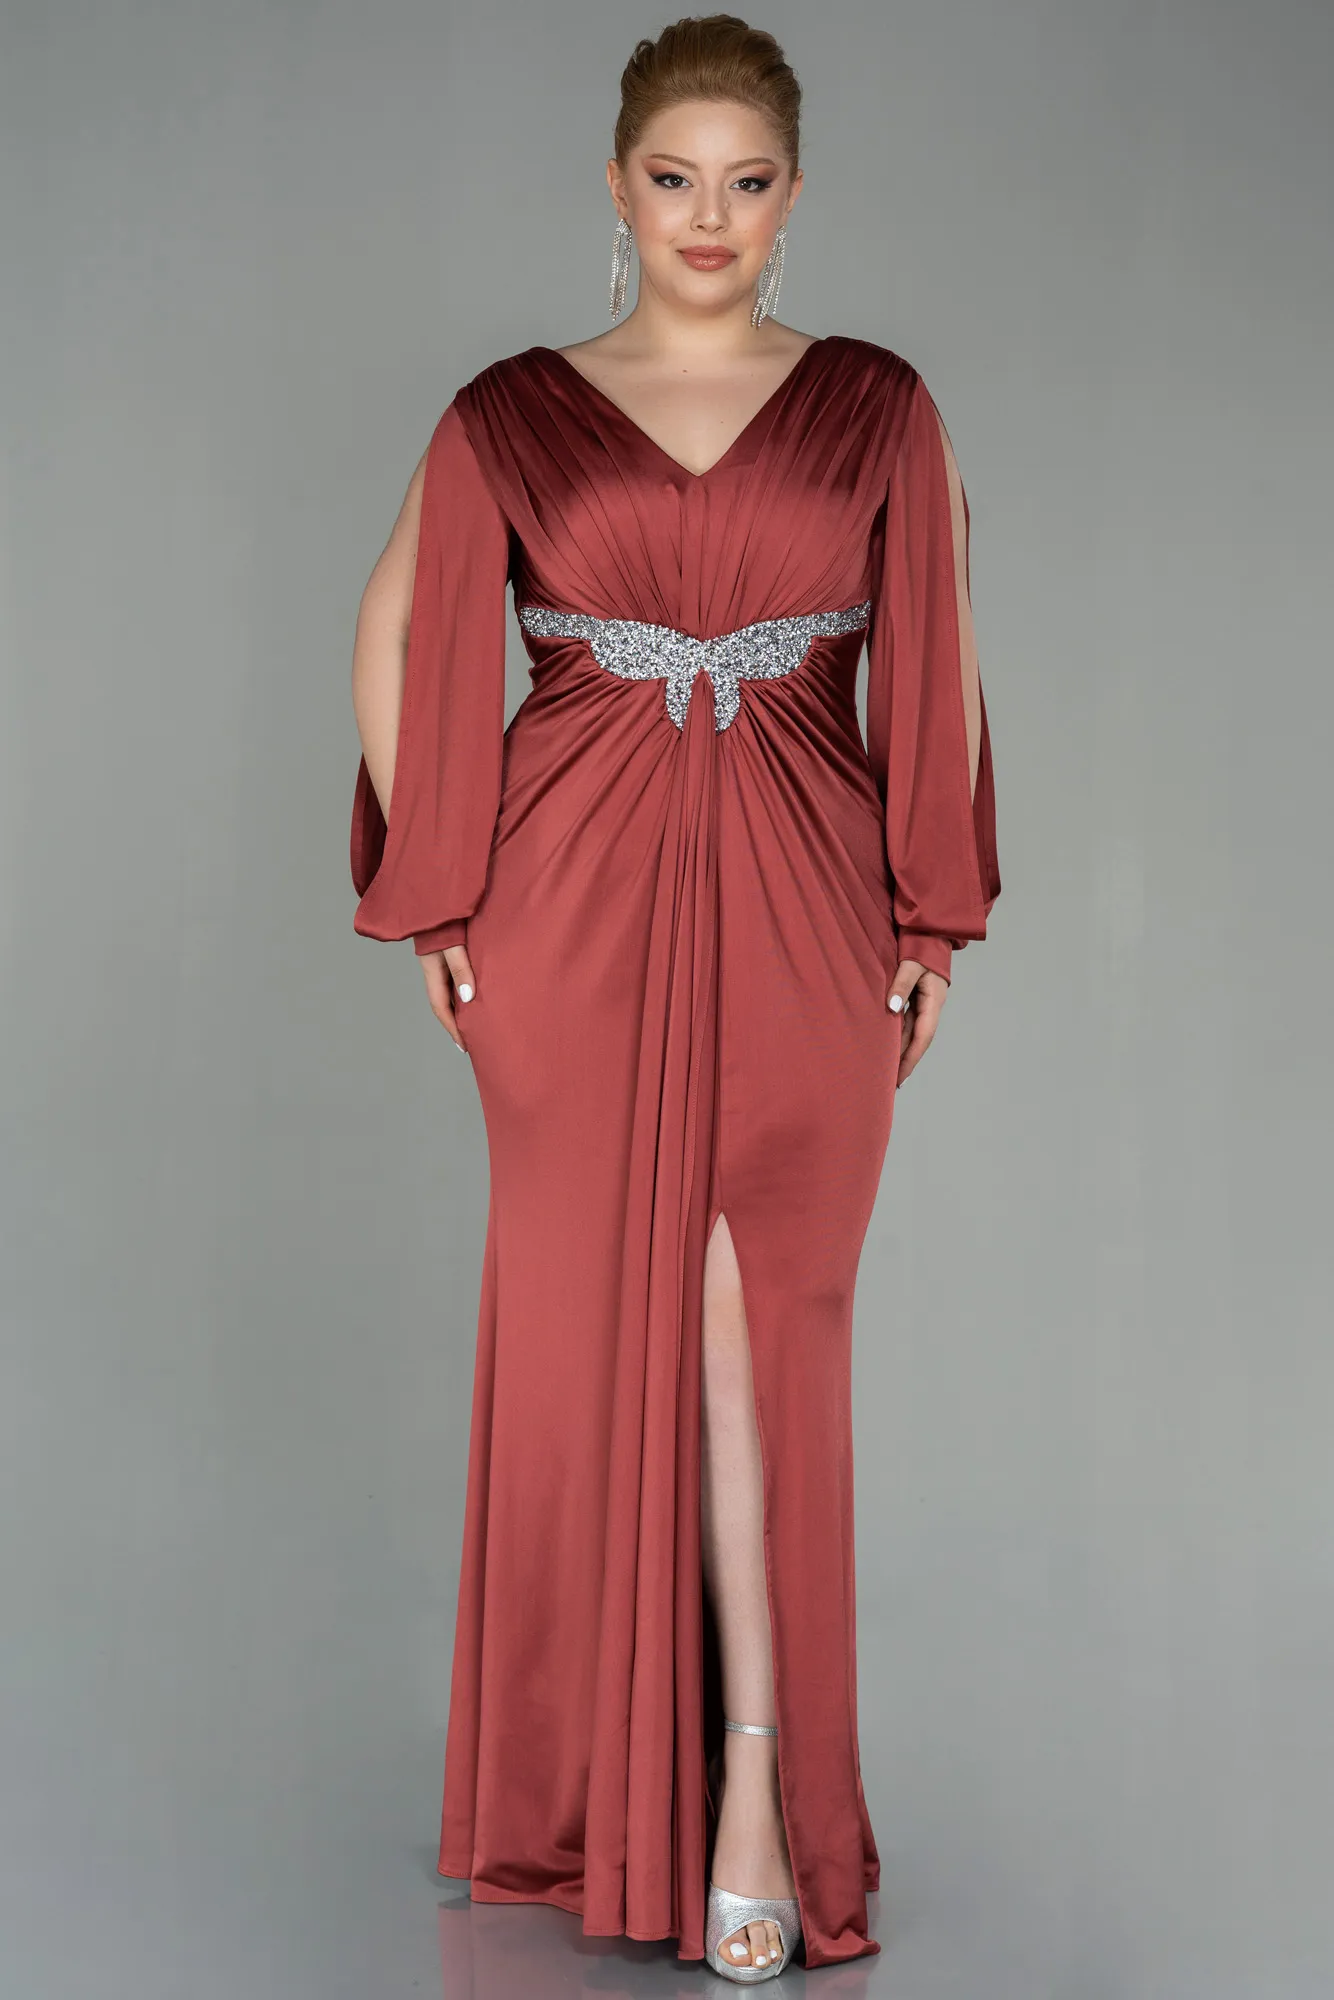 Cinnamon-Long Plus Size Evening Dress ABU2866